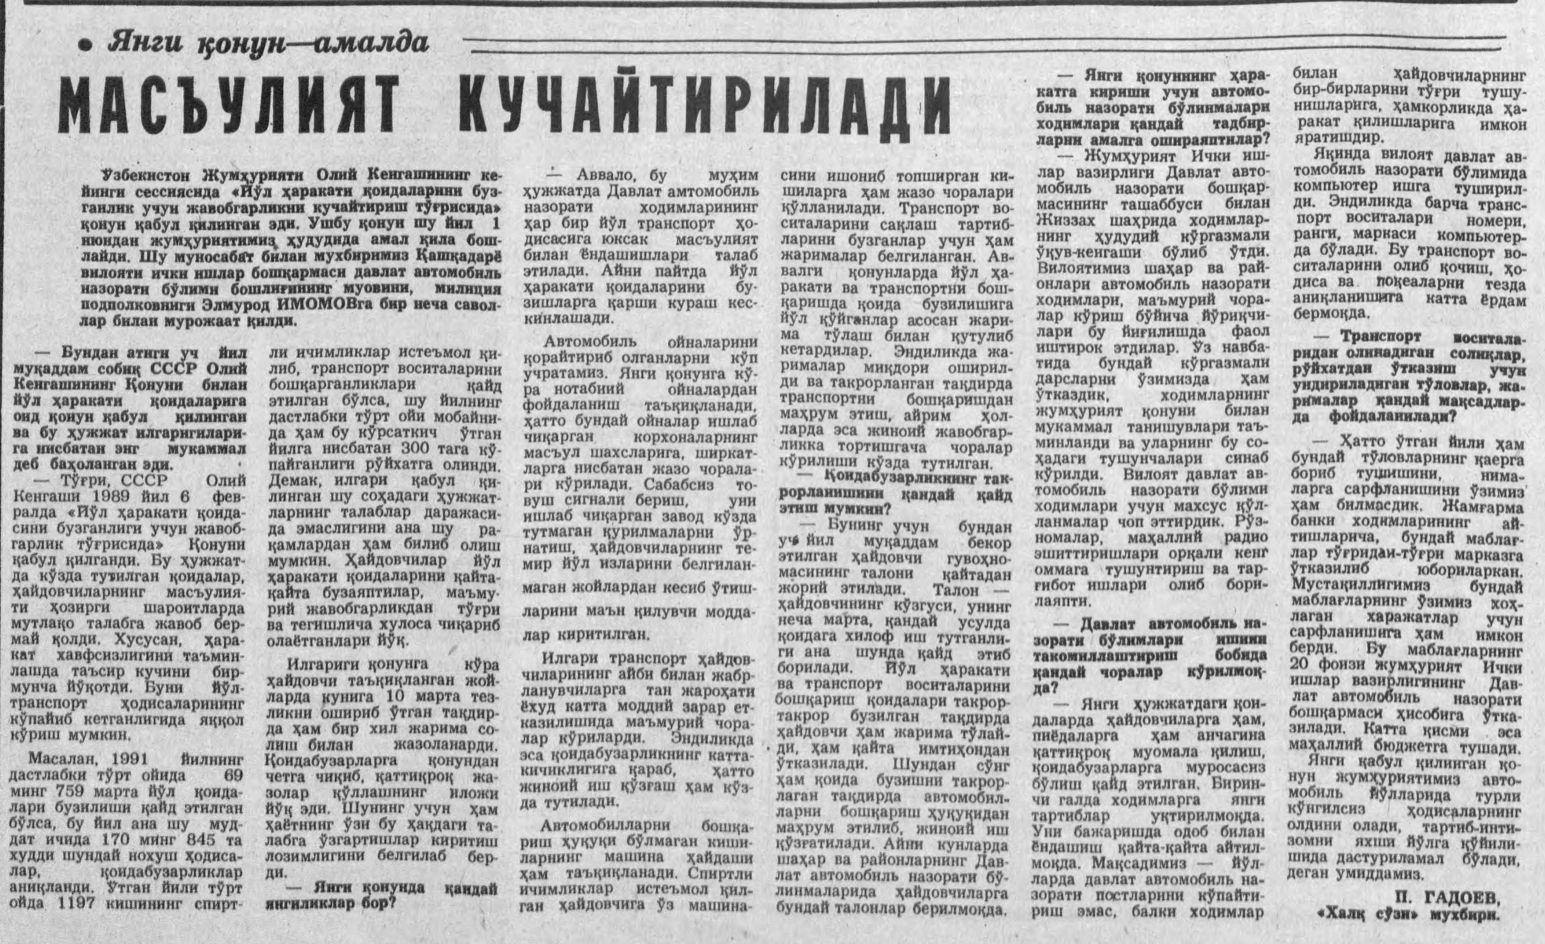 «Халқ сўзи» газетасининг 1992 йил 20 май сонидан лавҳа